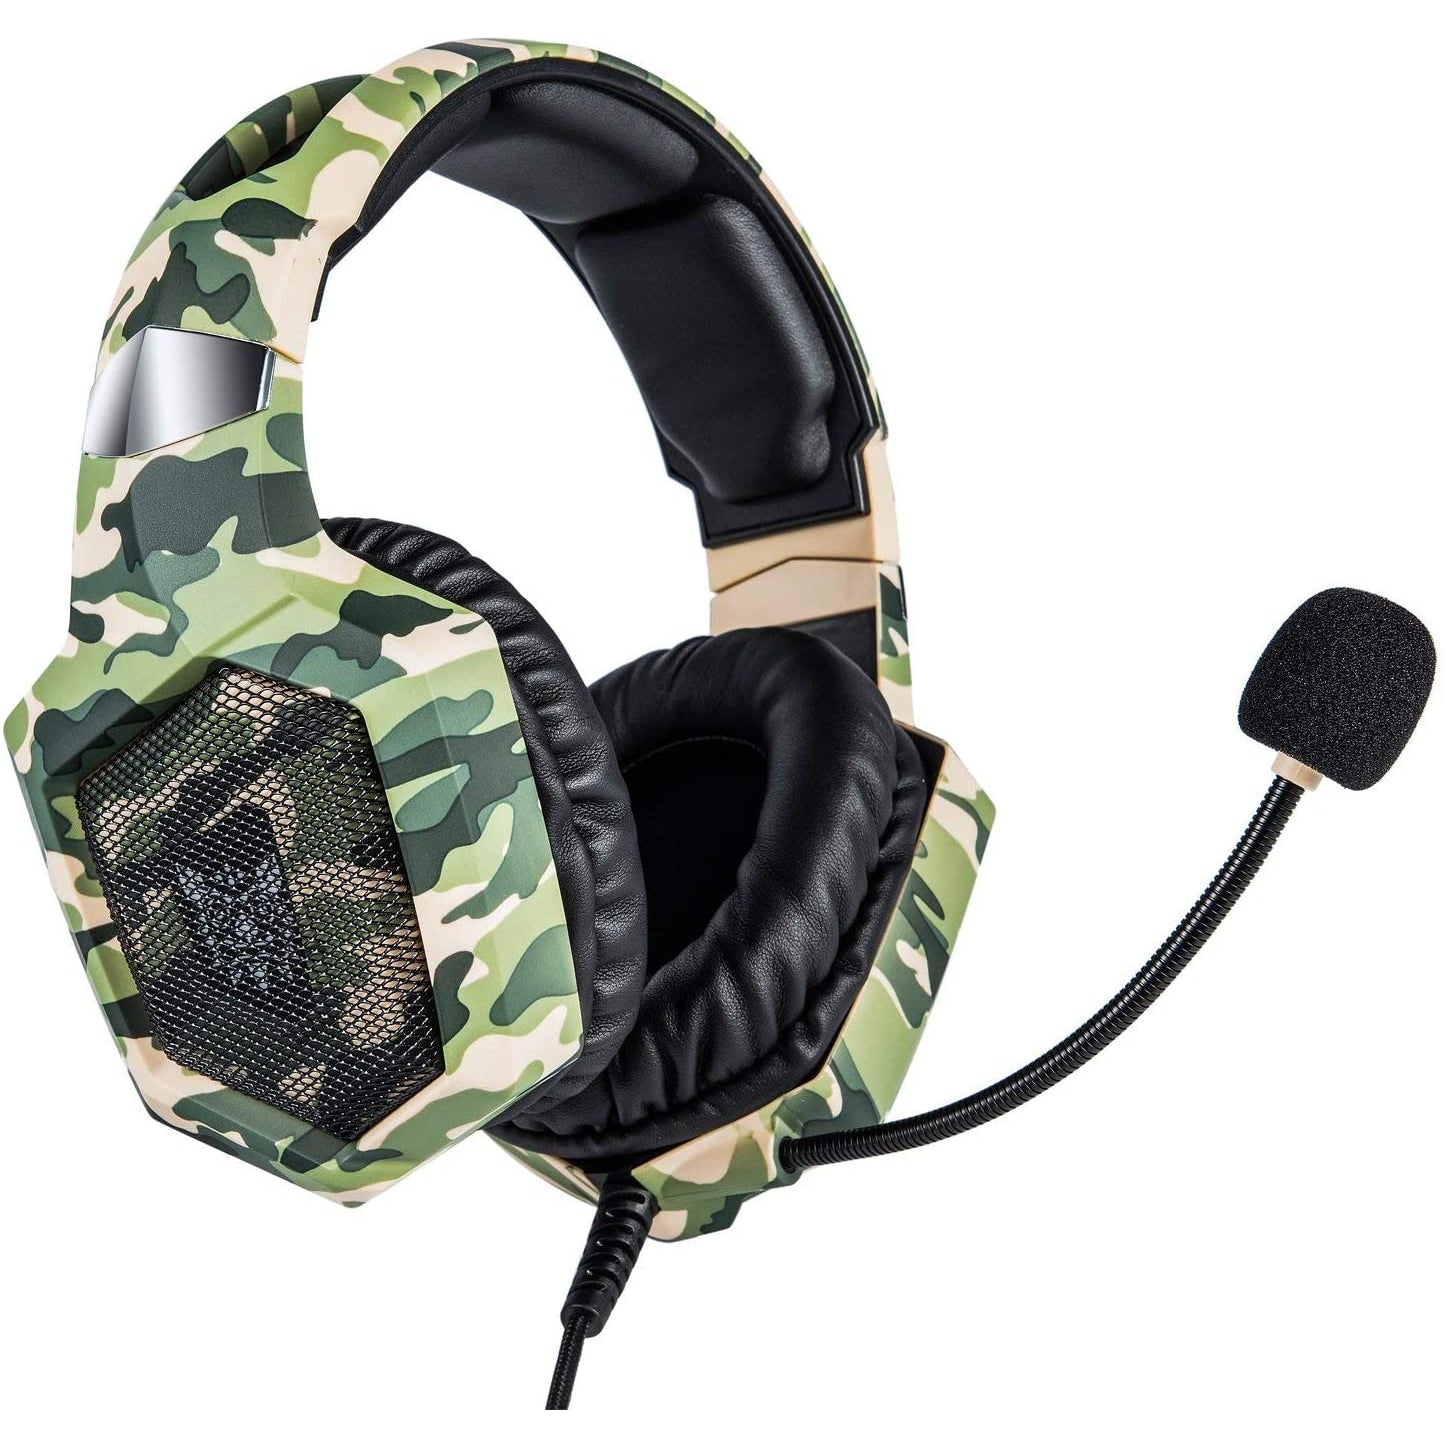 ONIKUMA K8 Professional Gaming Headset - Camouflage